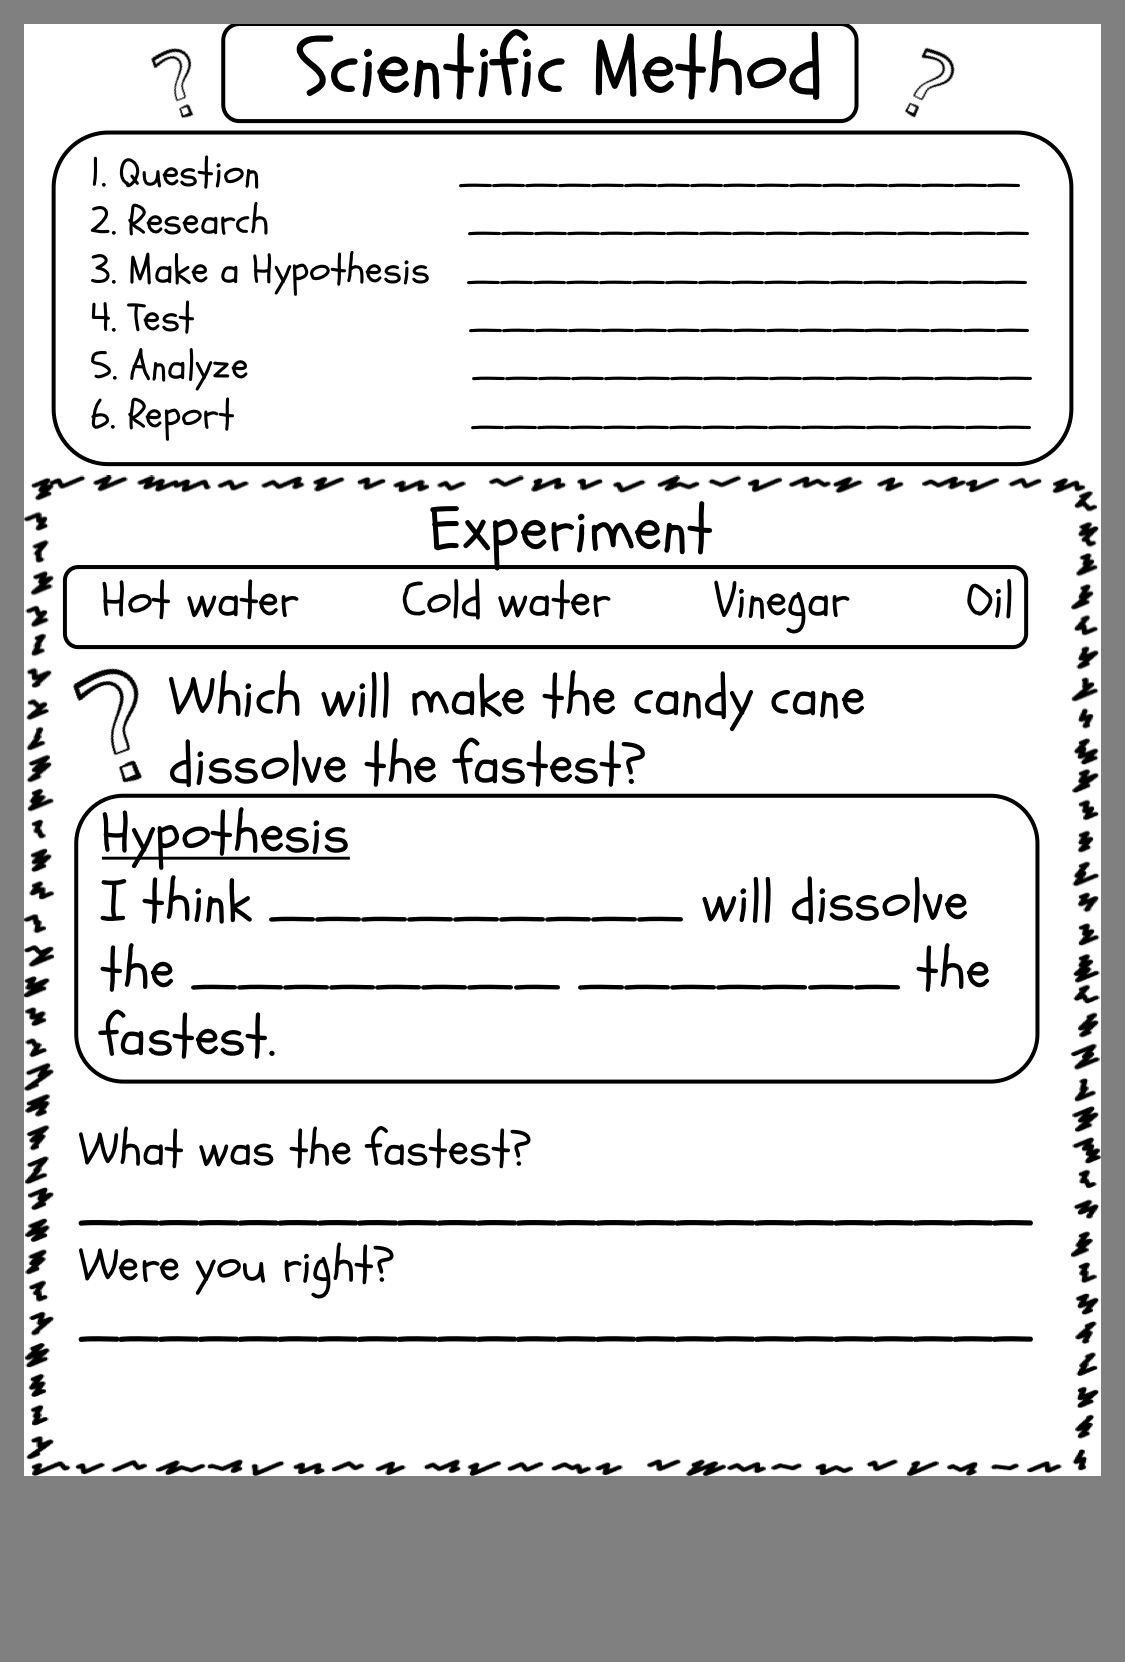 Scientific Method Worksheets 5th Grade Scientific Method Experiment Worksheet